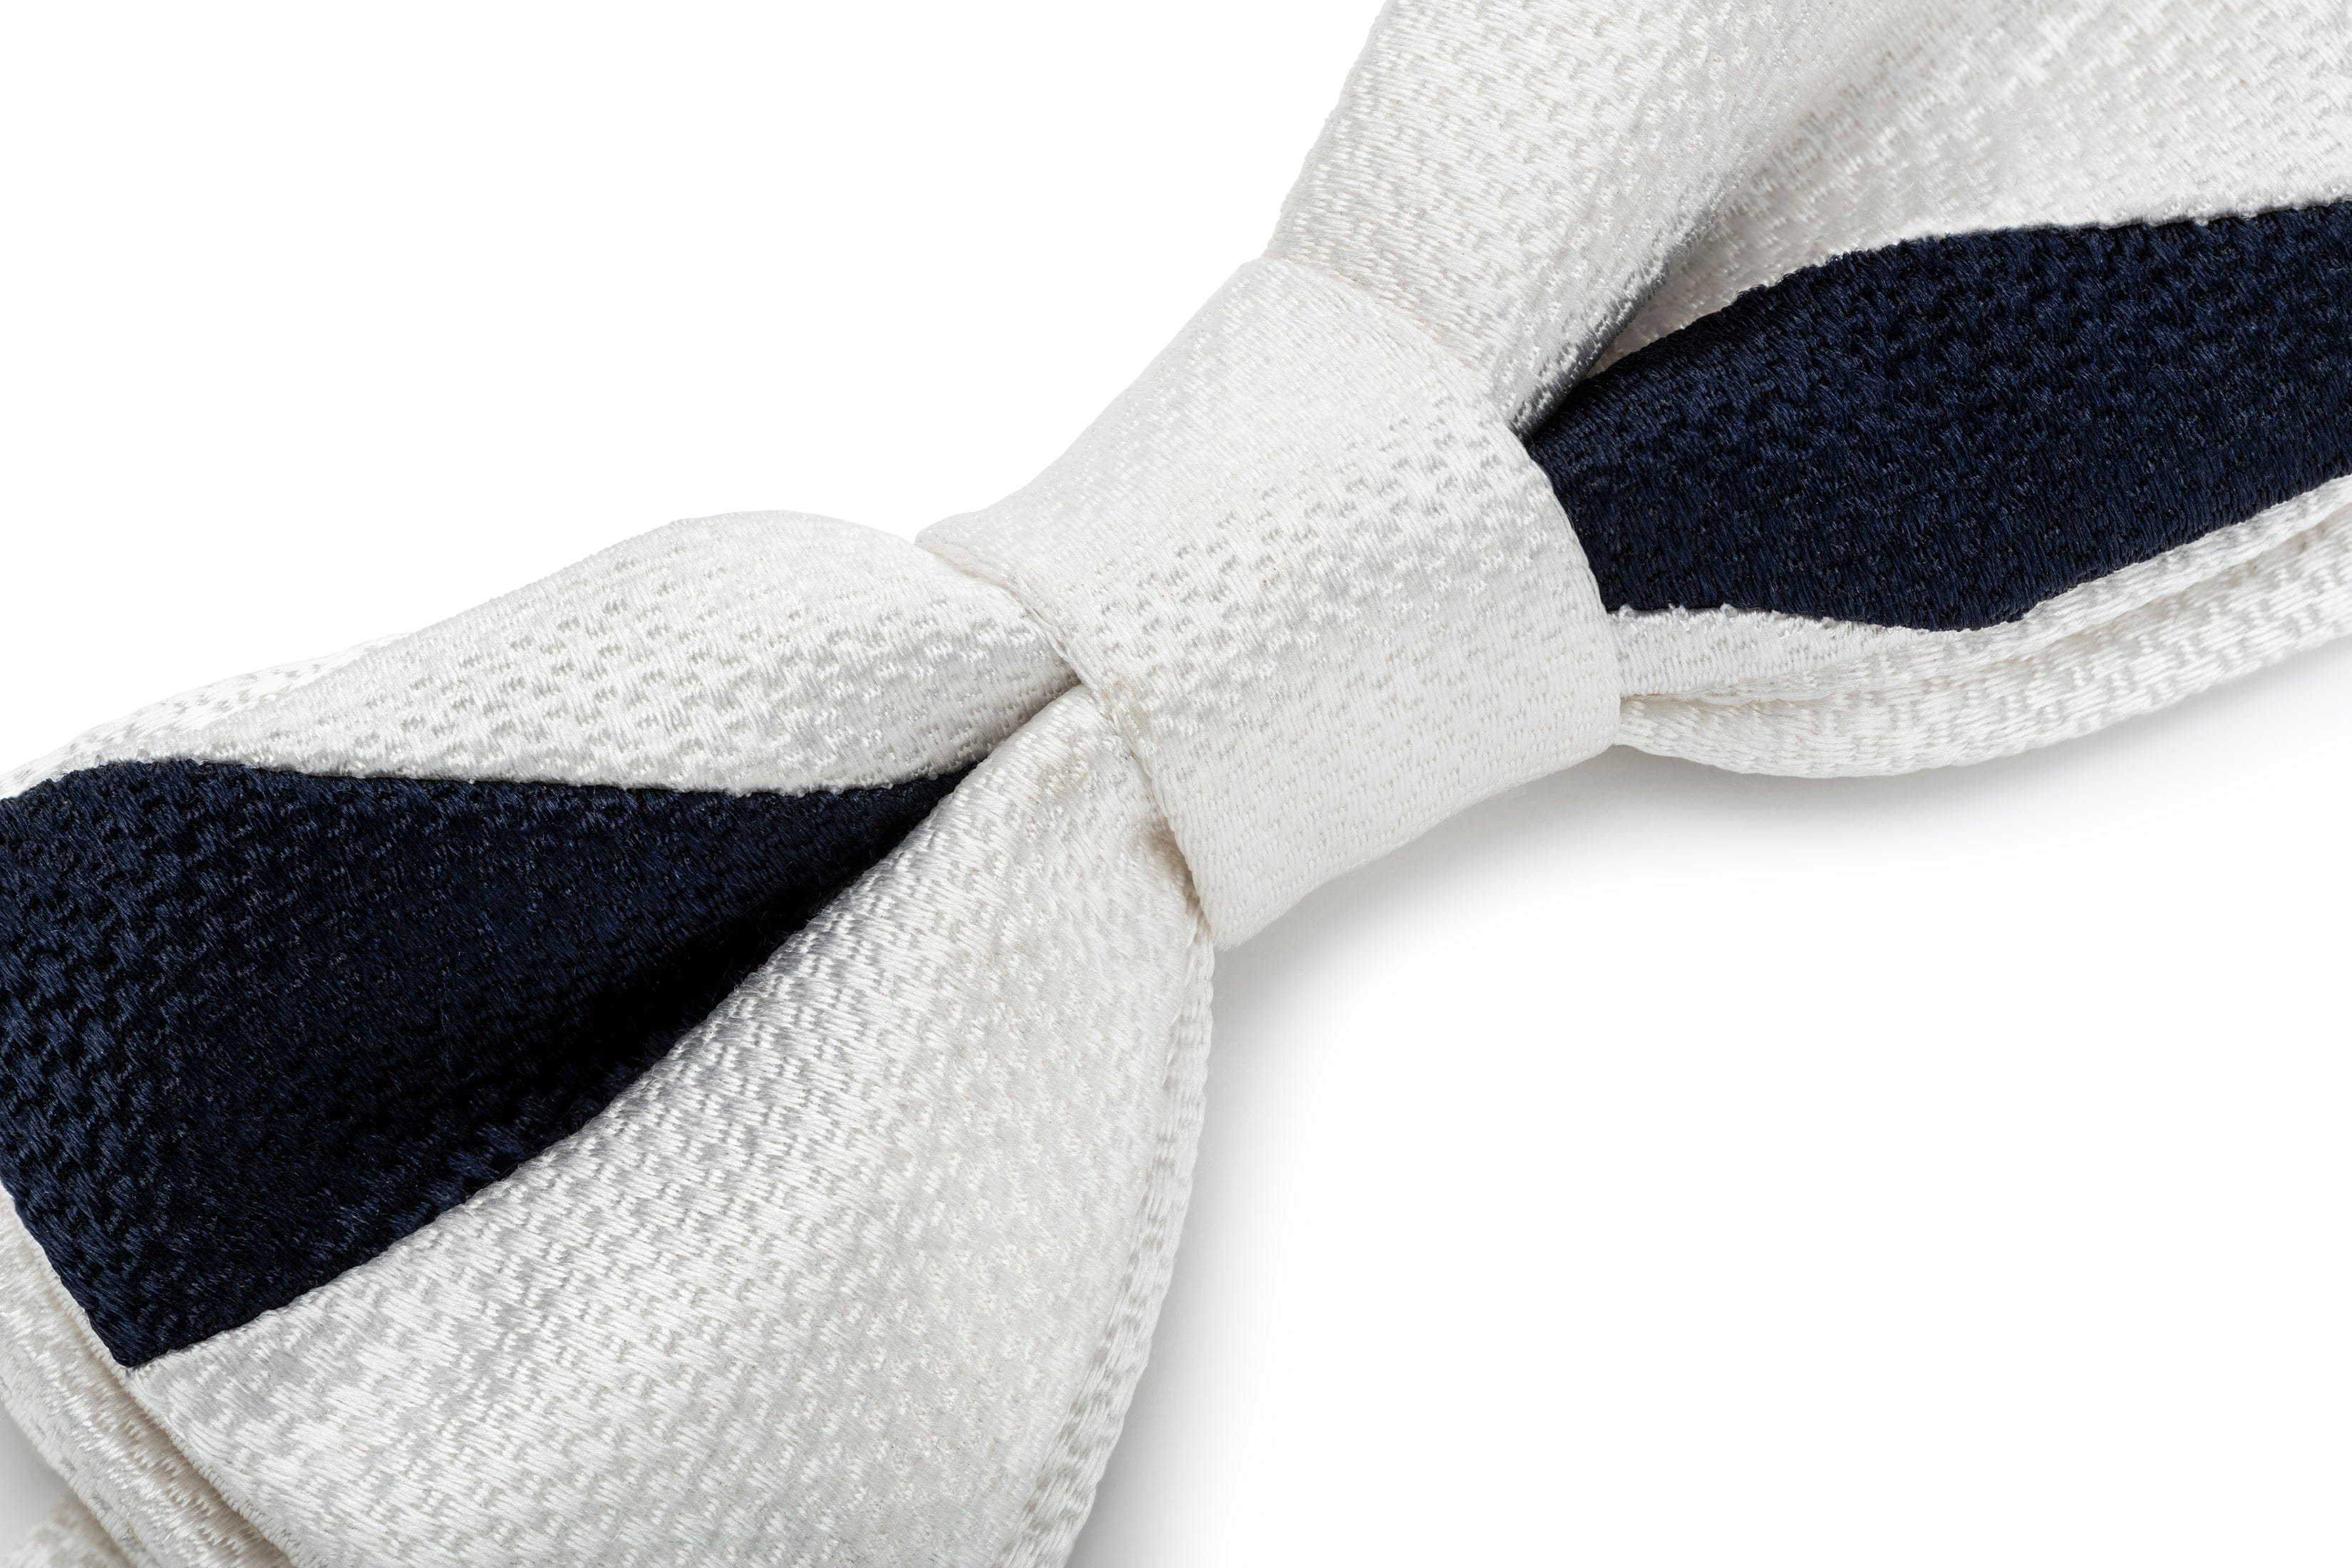 Splendour Bow Tie (100 % Silk, Multicolour)